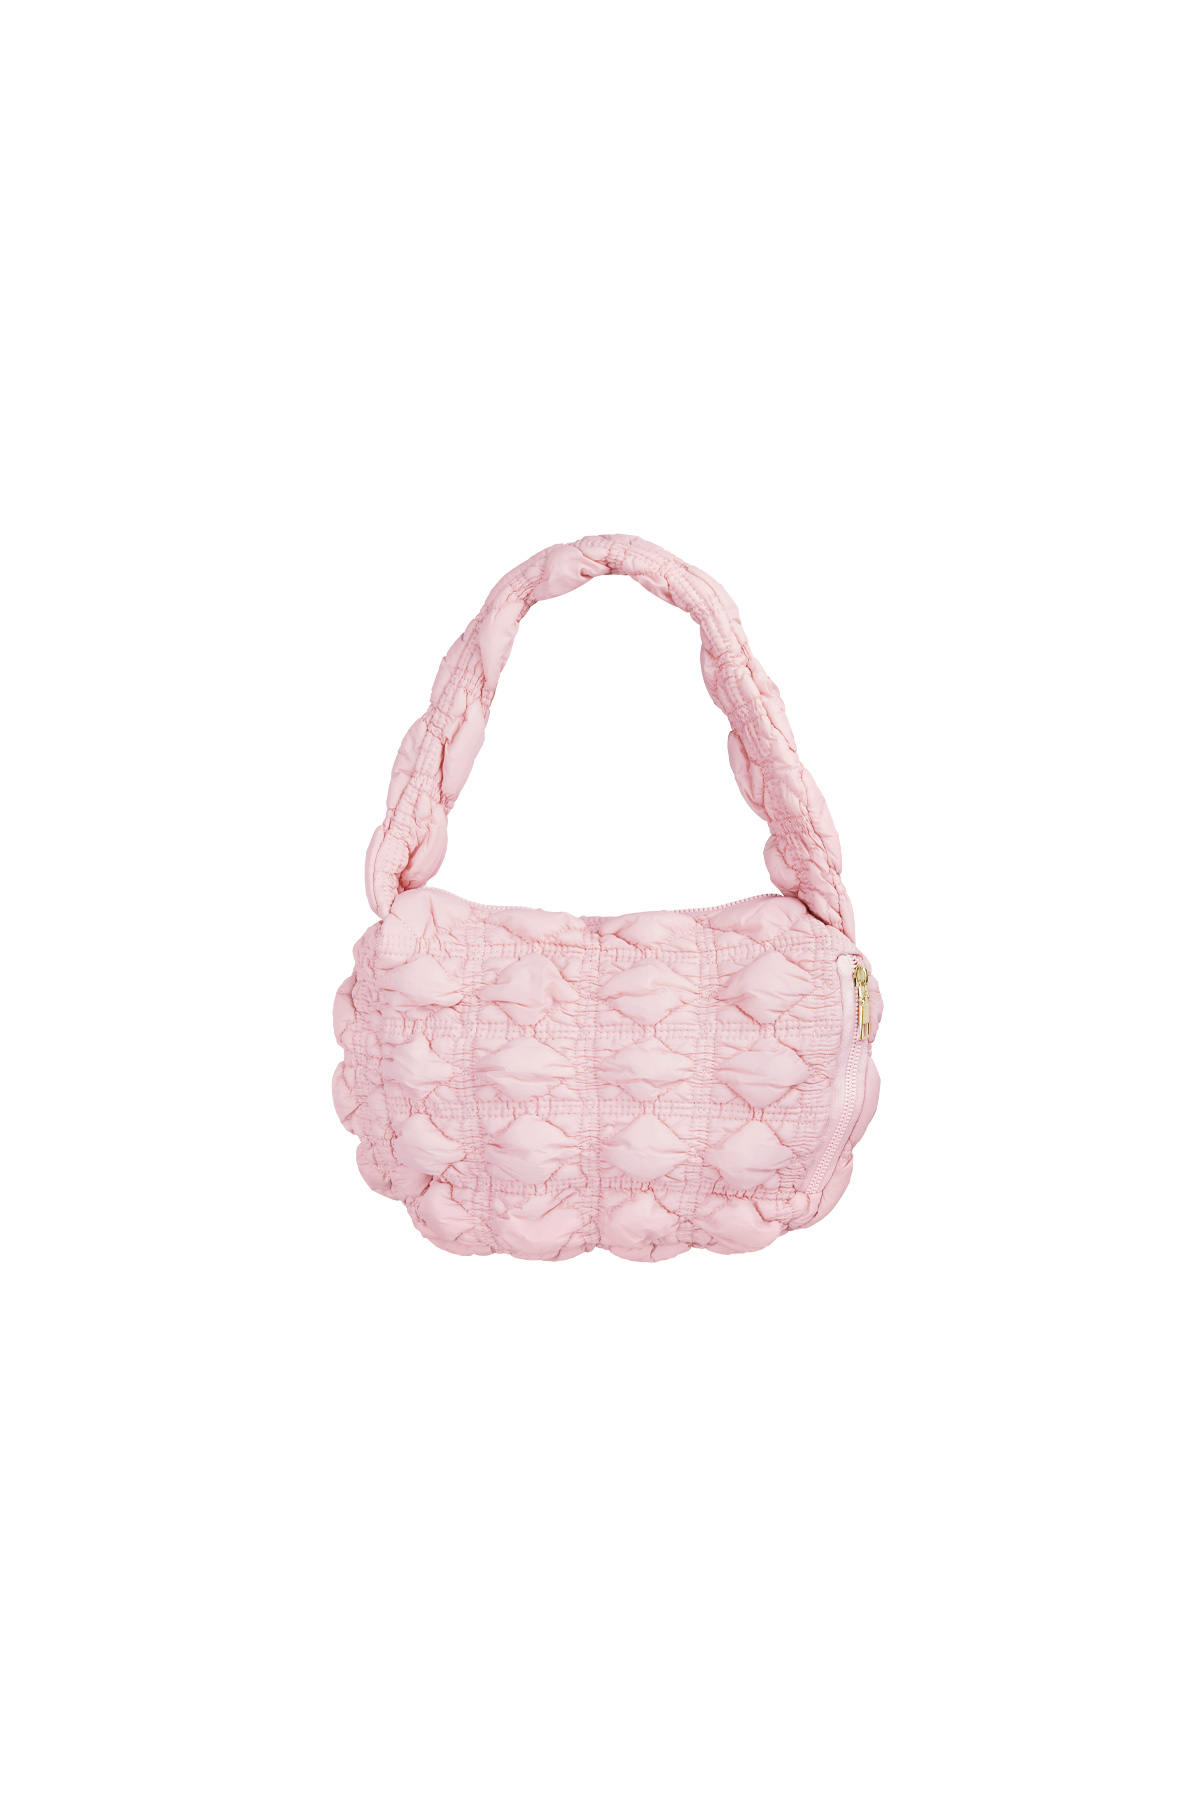 Handbag cloudy love - pink